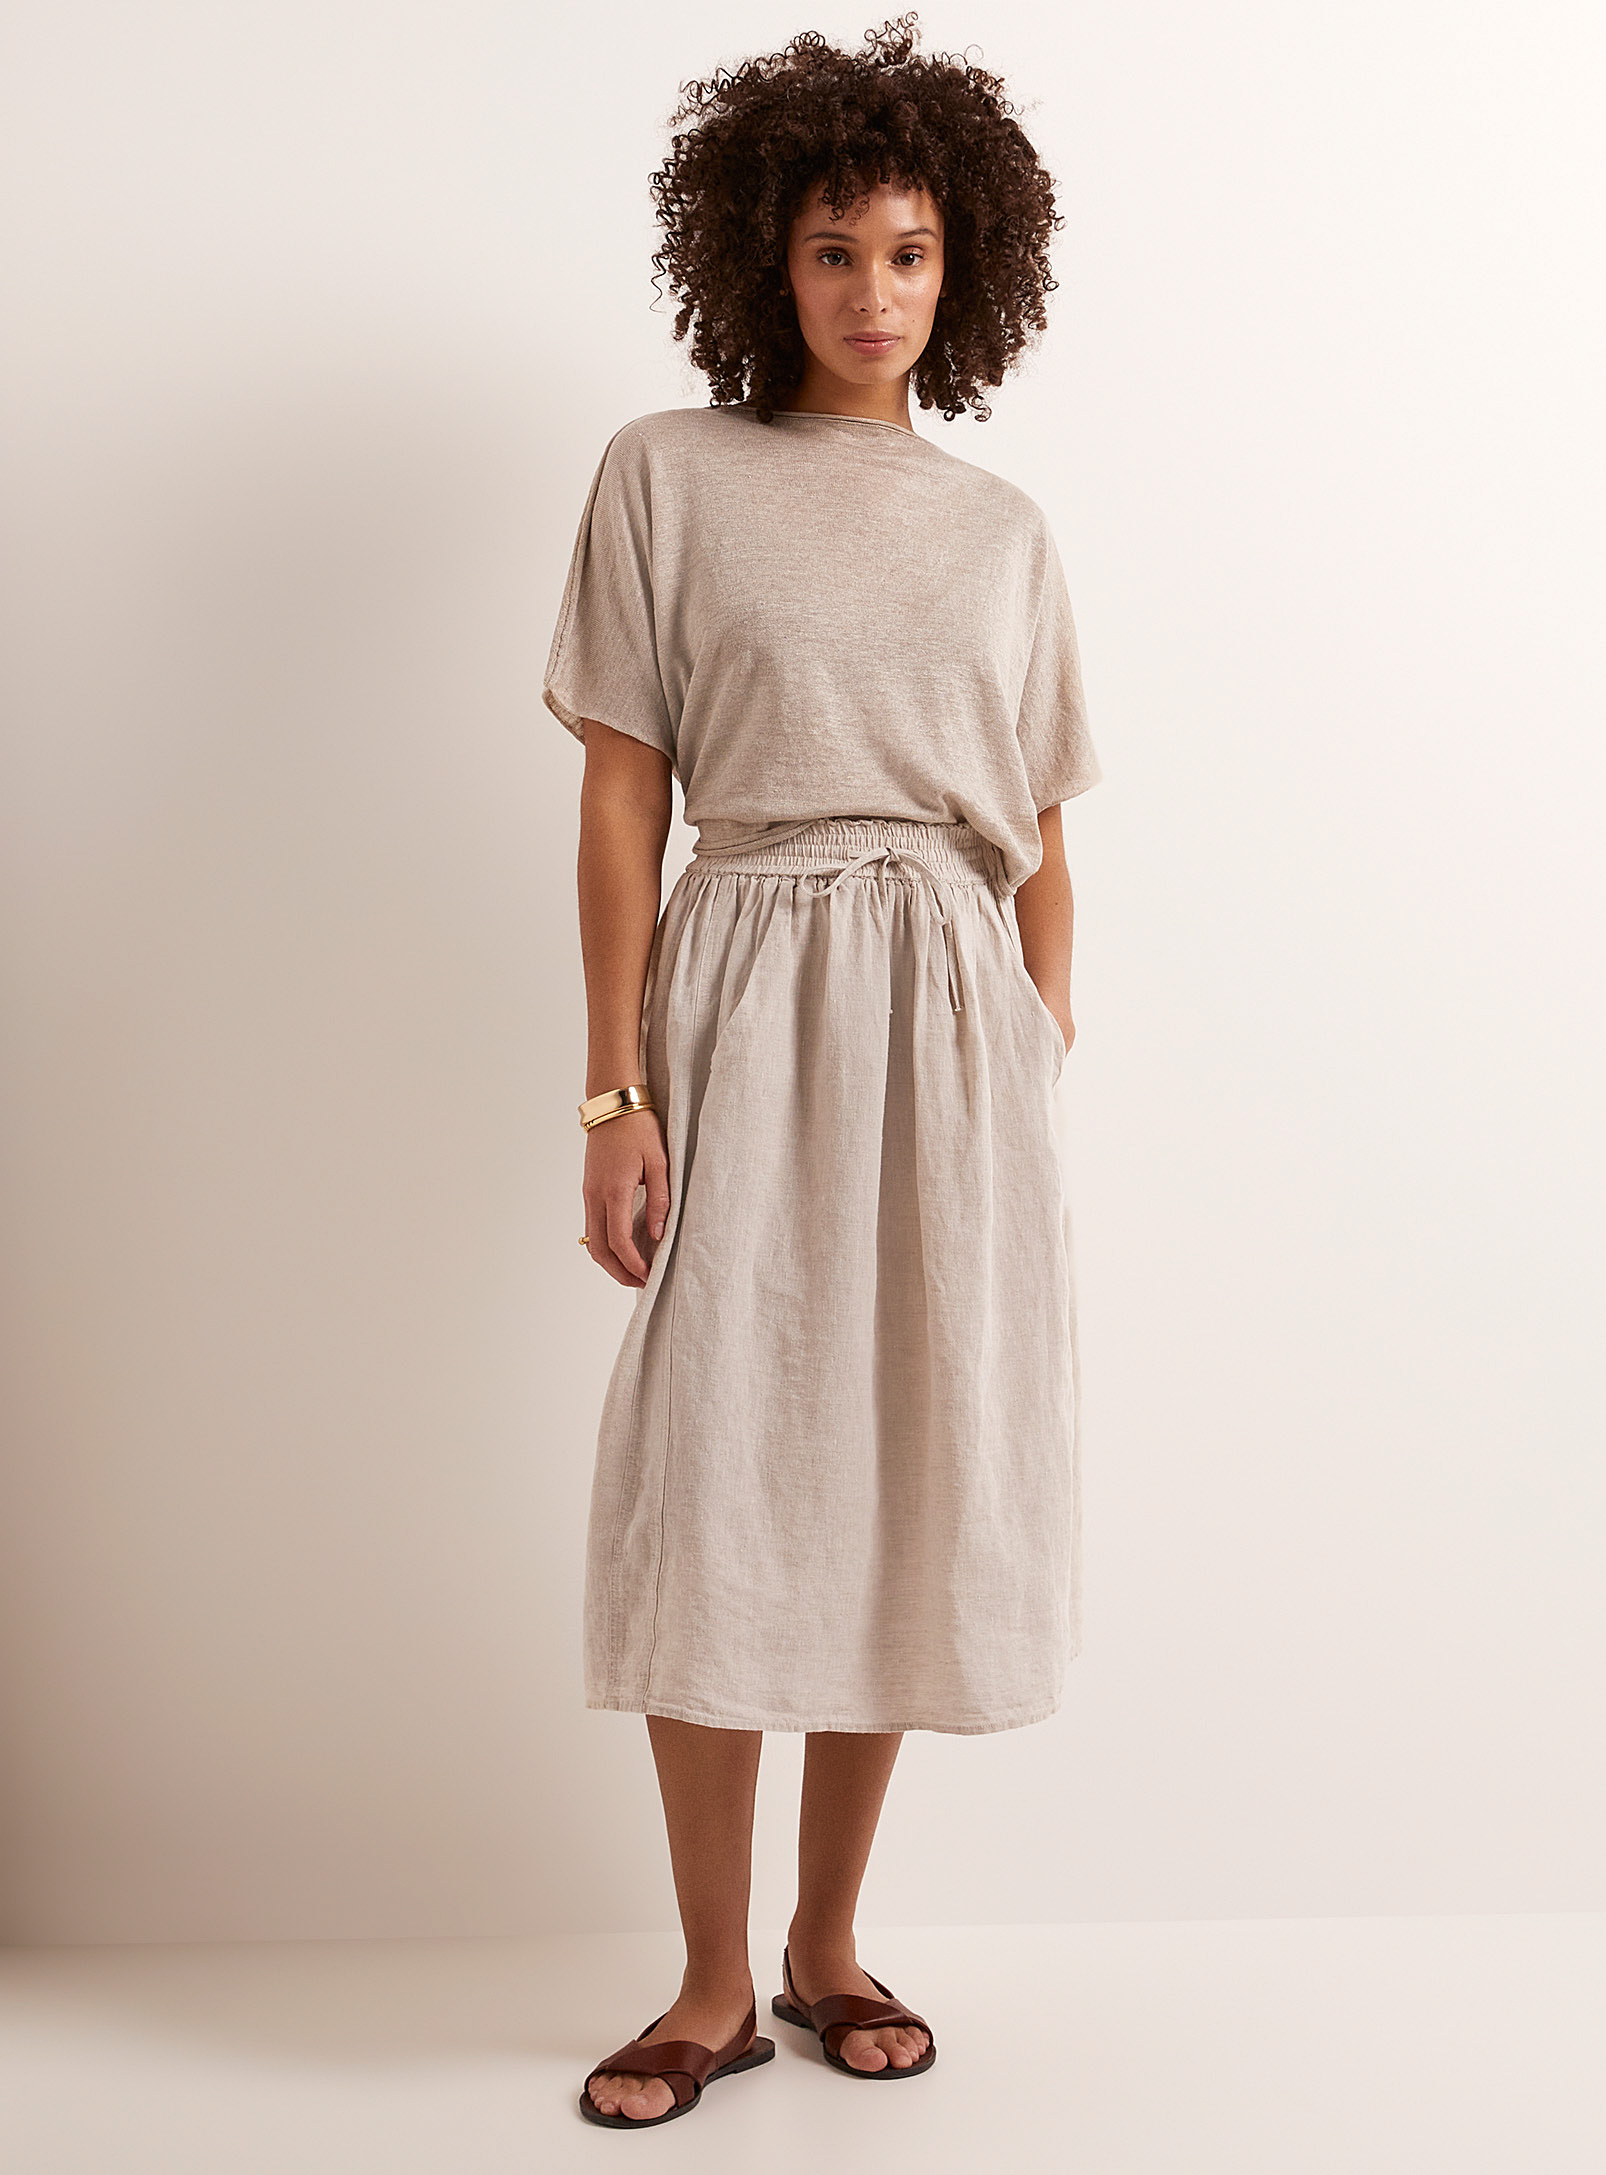 NAÏF - Women's Heidi elastic-waist pure linen skirt